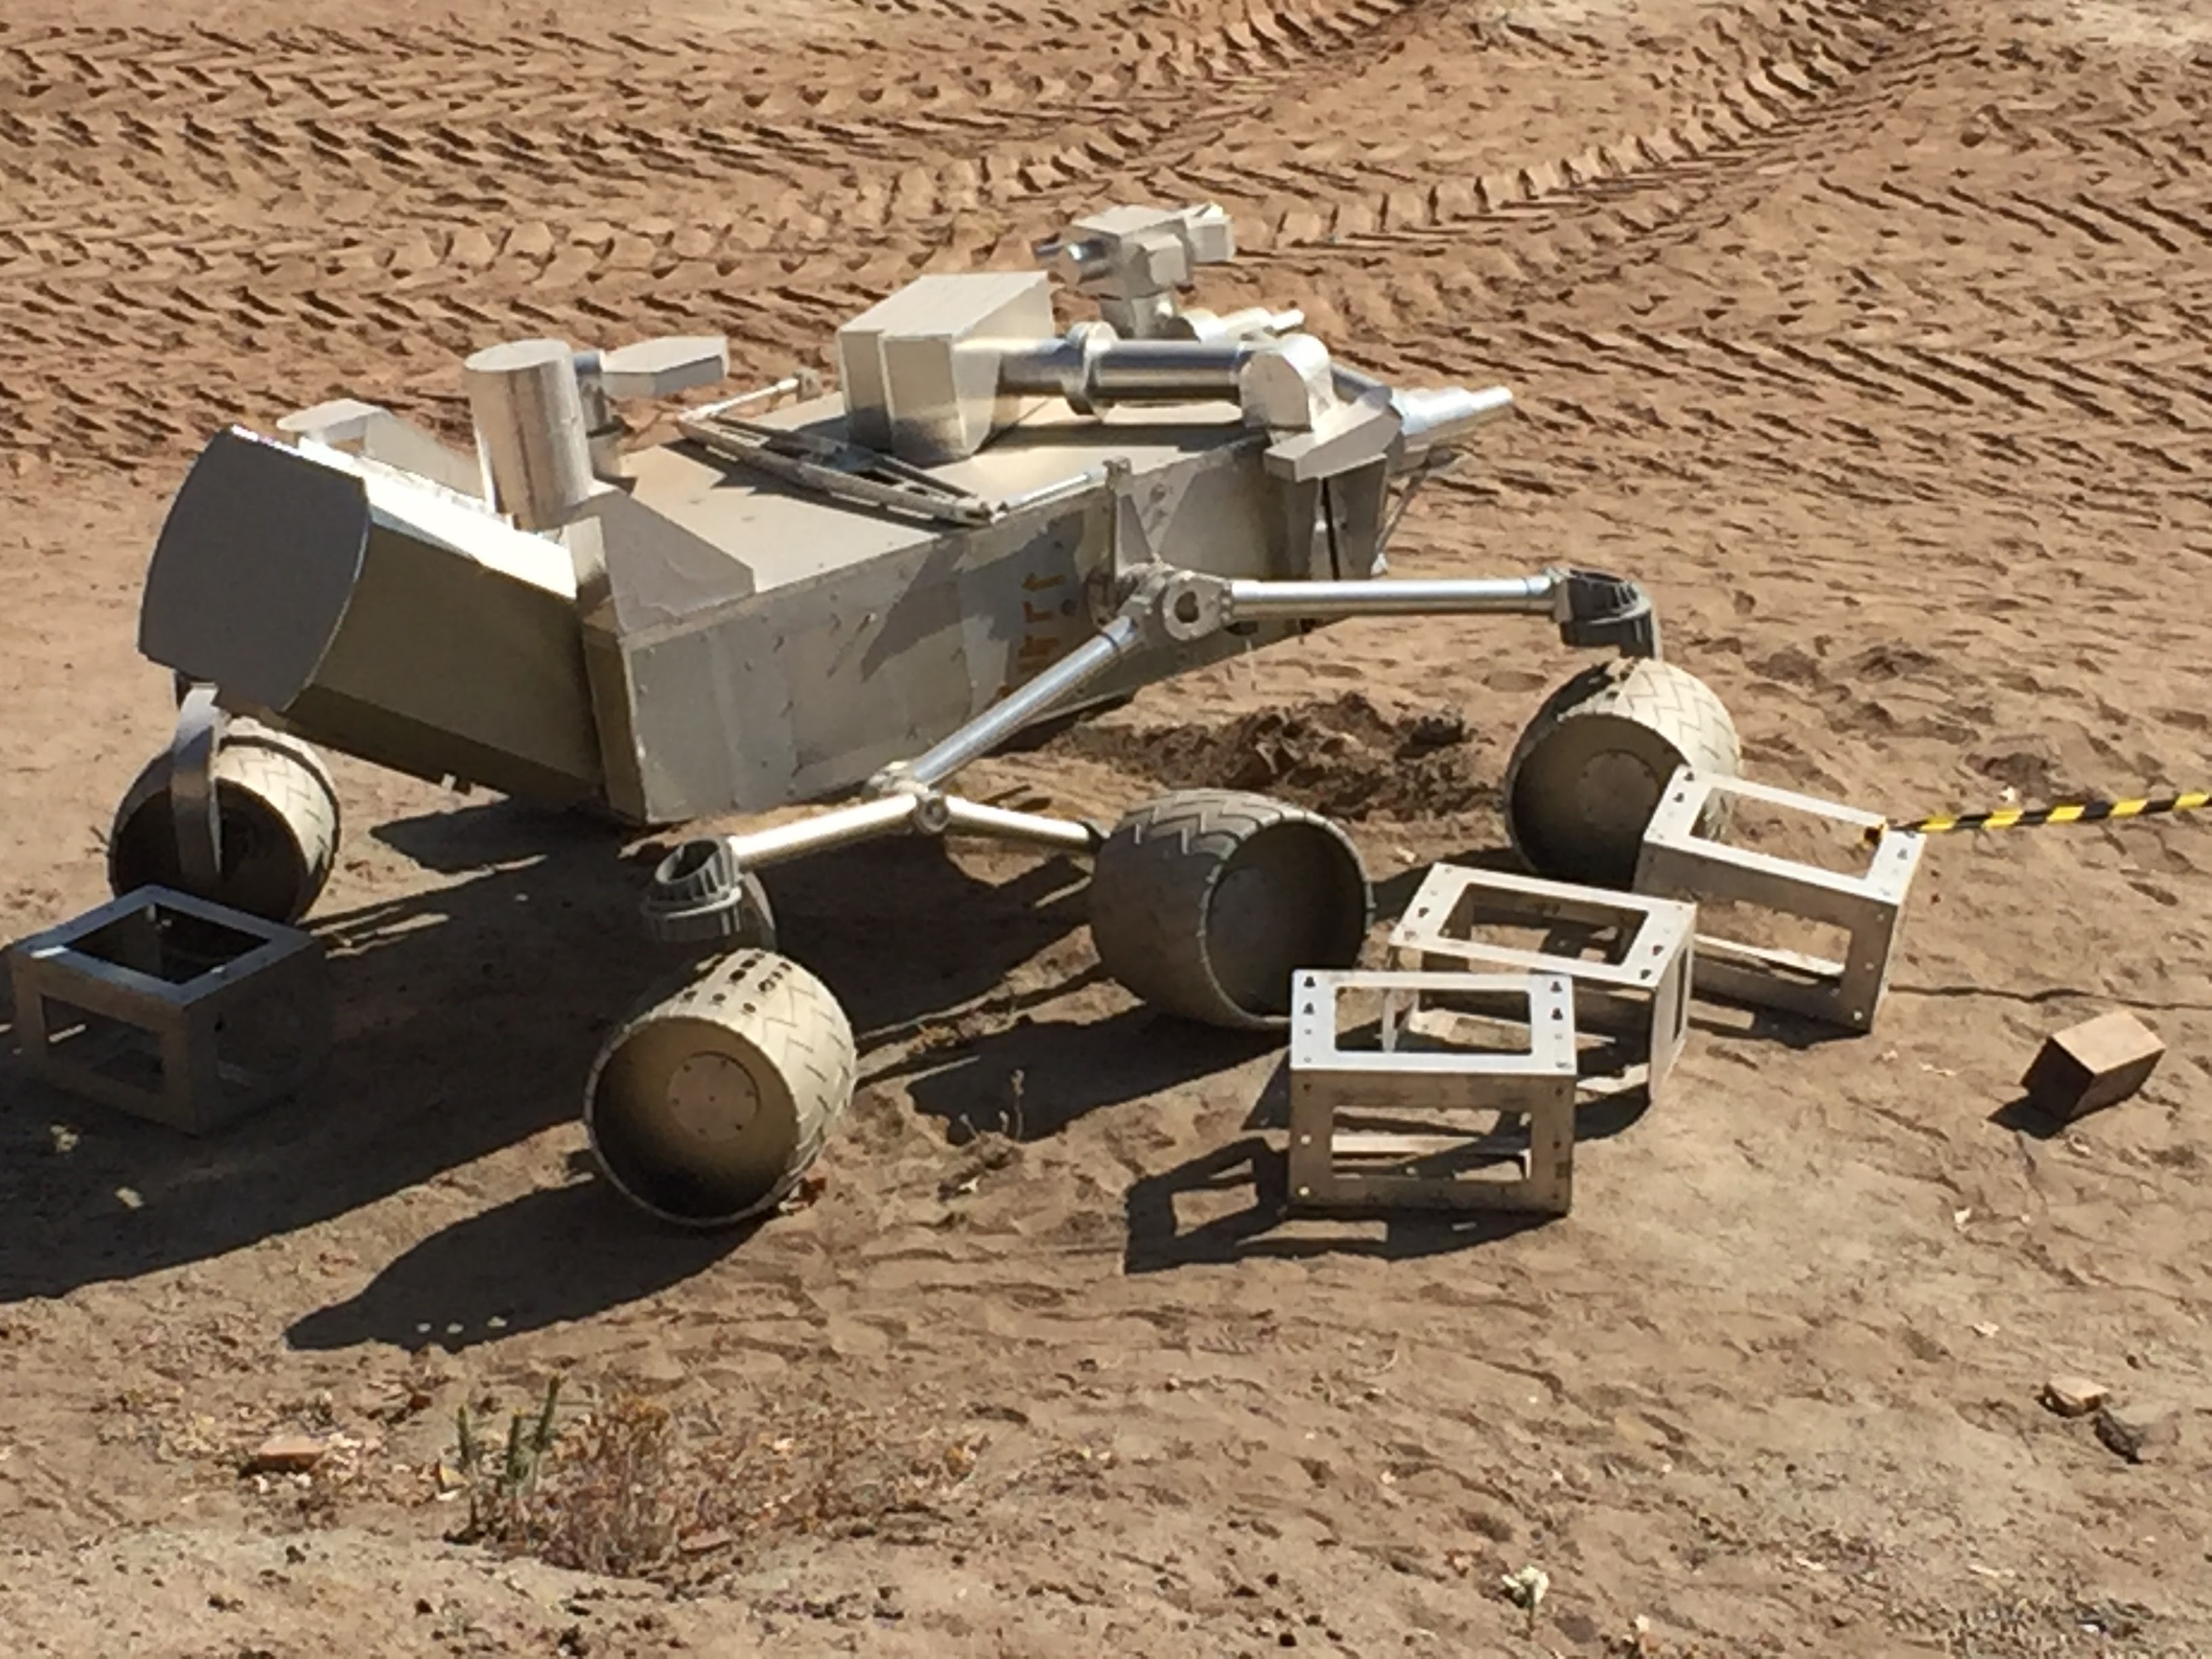 Mars rover being tested at NASA's Jet Propulsion Lab (JPL) "Mars yard."